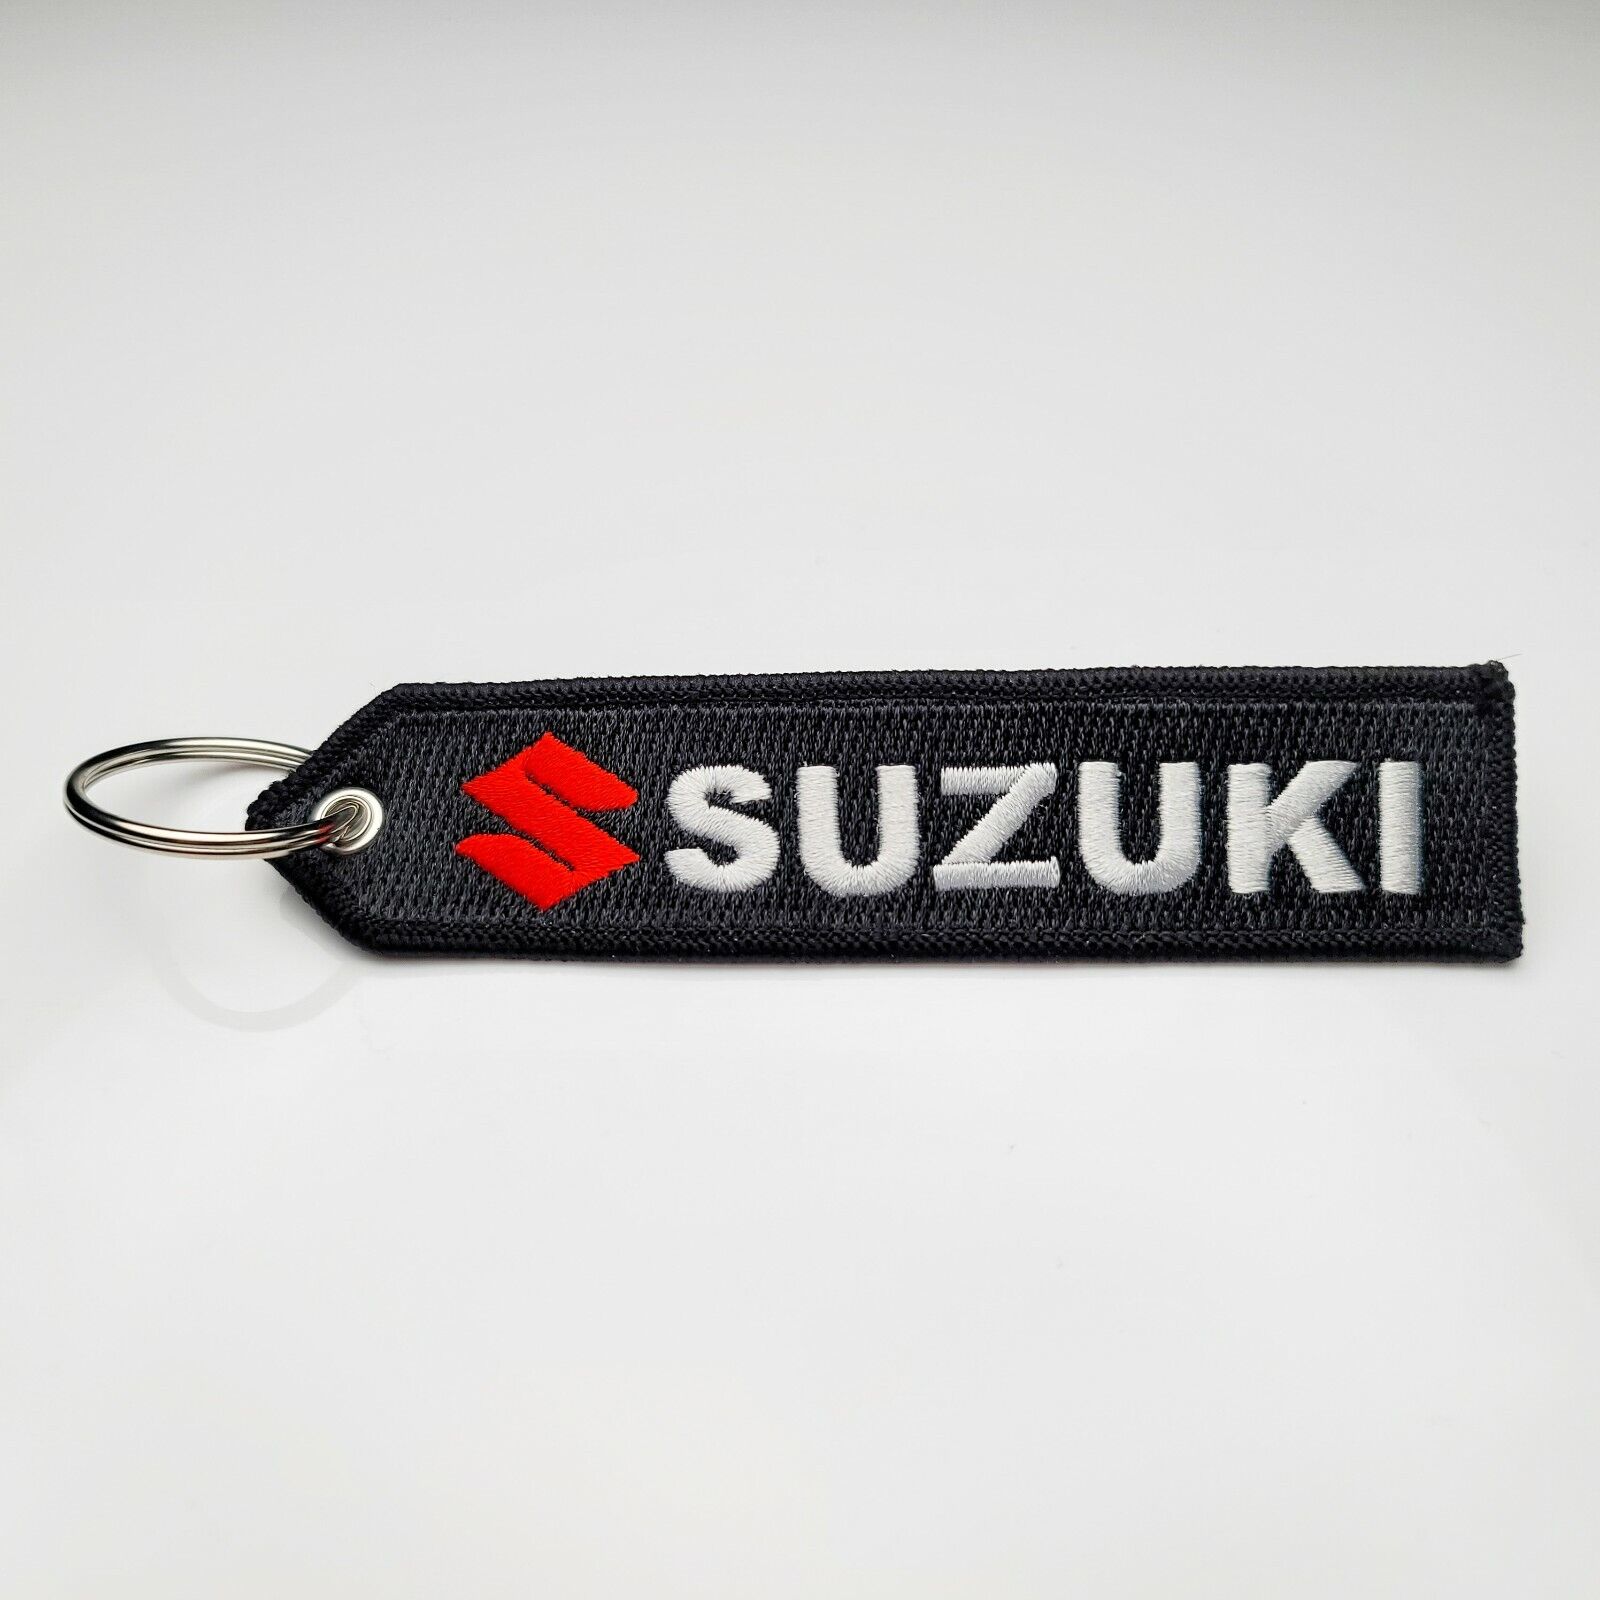 Suzuki Motorcycle Off road street Jetski Double Sided Embroidered Keychain Tag 